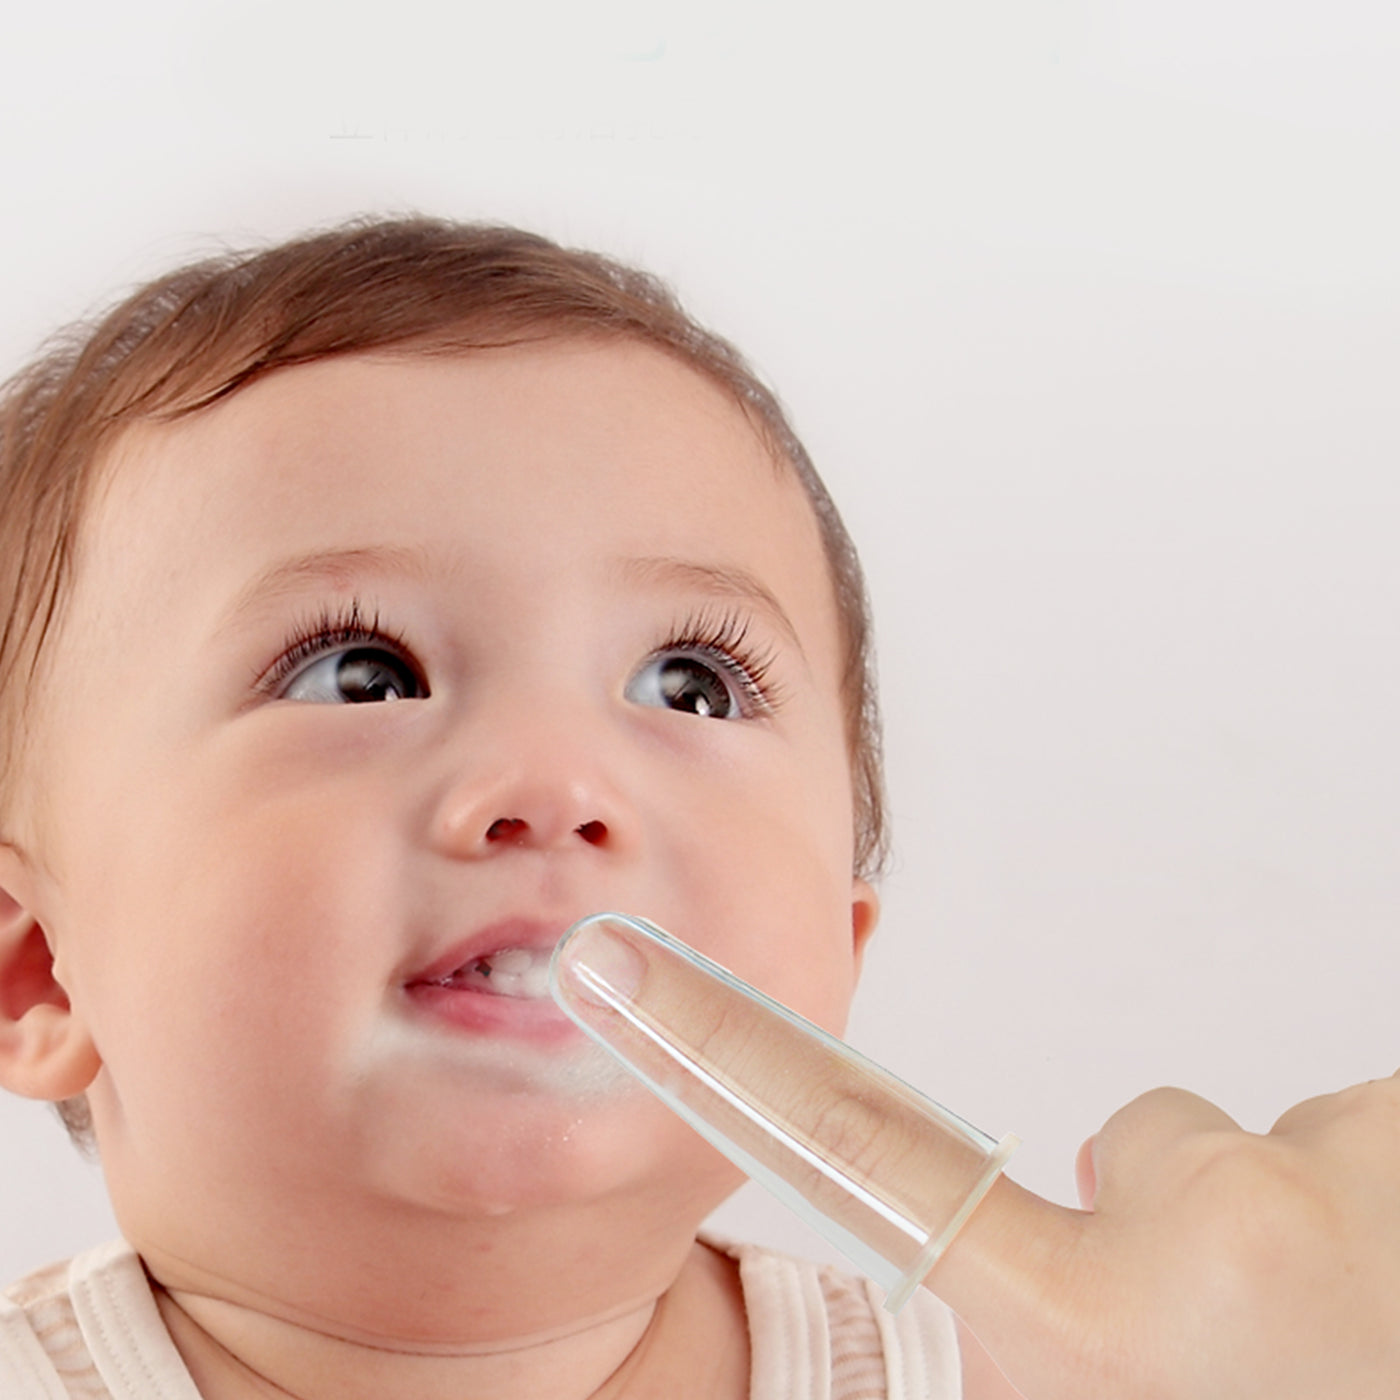 Mombella Baby Finger Toothbrush Silcion Skin Gum Wild Clean Toothbrush - mombella